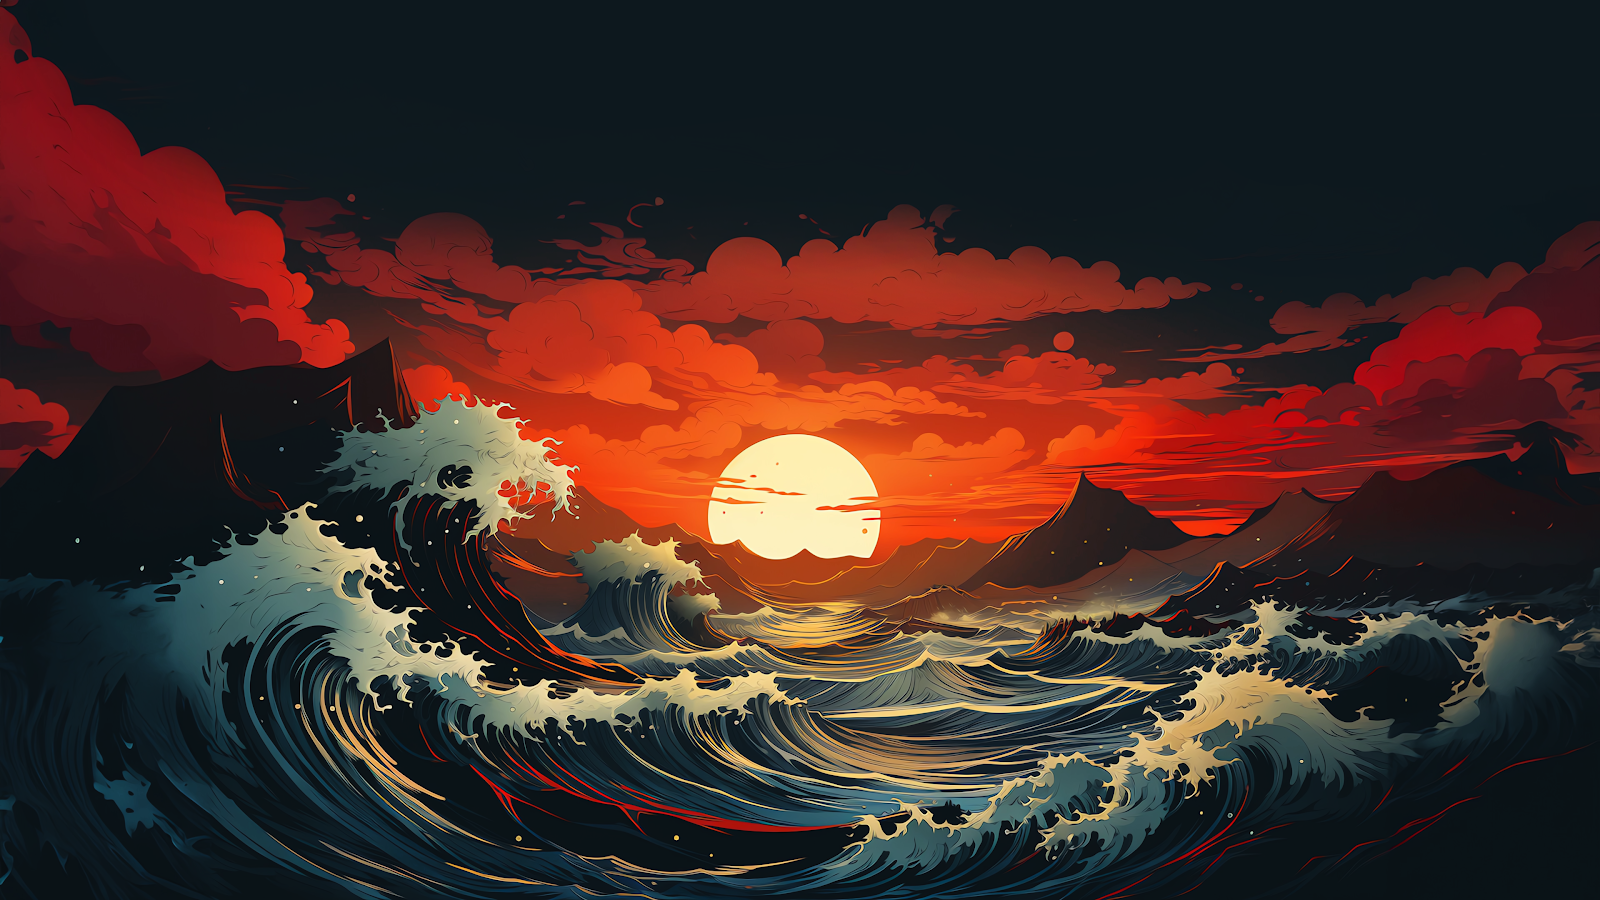 Ocean Sunset Waves: 4K PC Wallpaper with Breathtaking Sunset Scenery